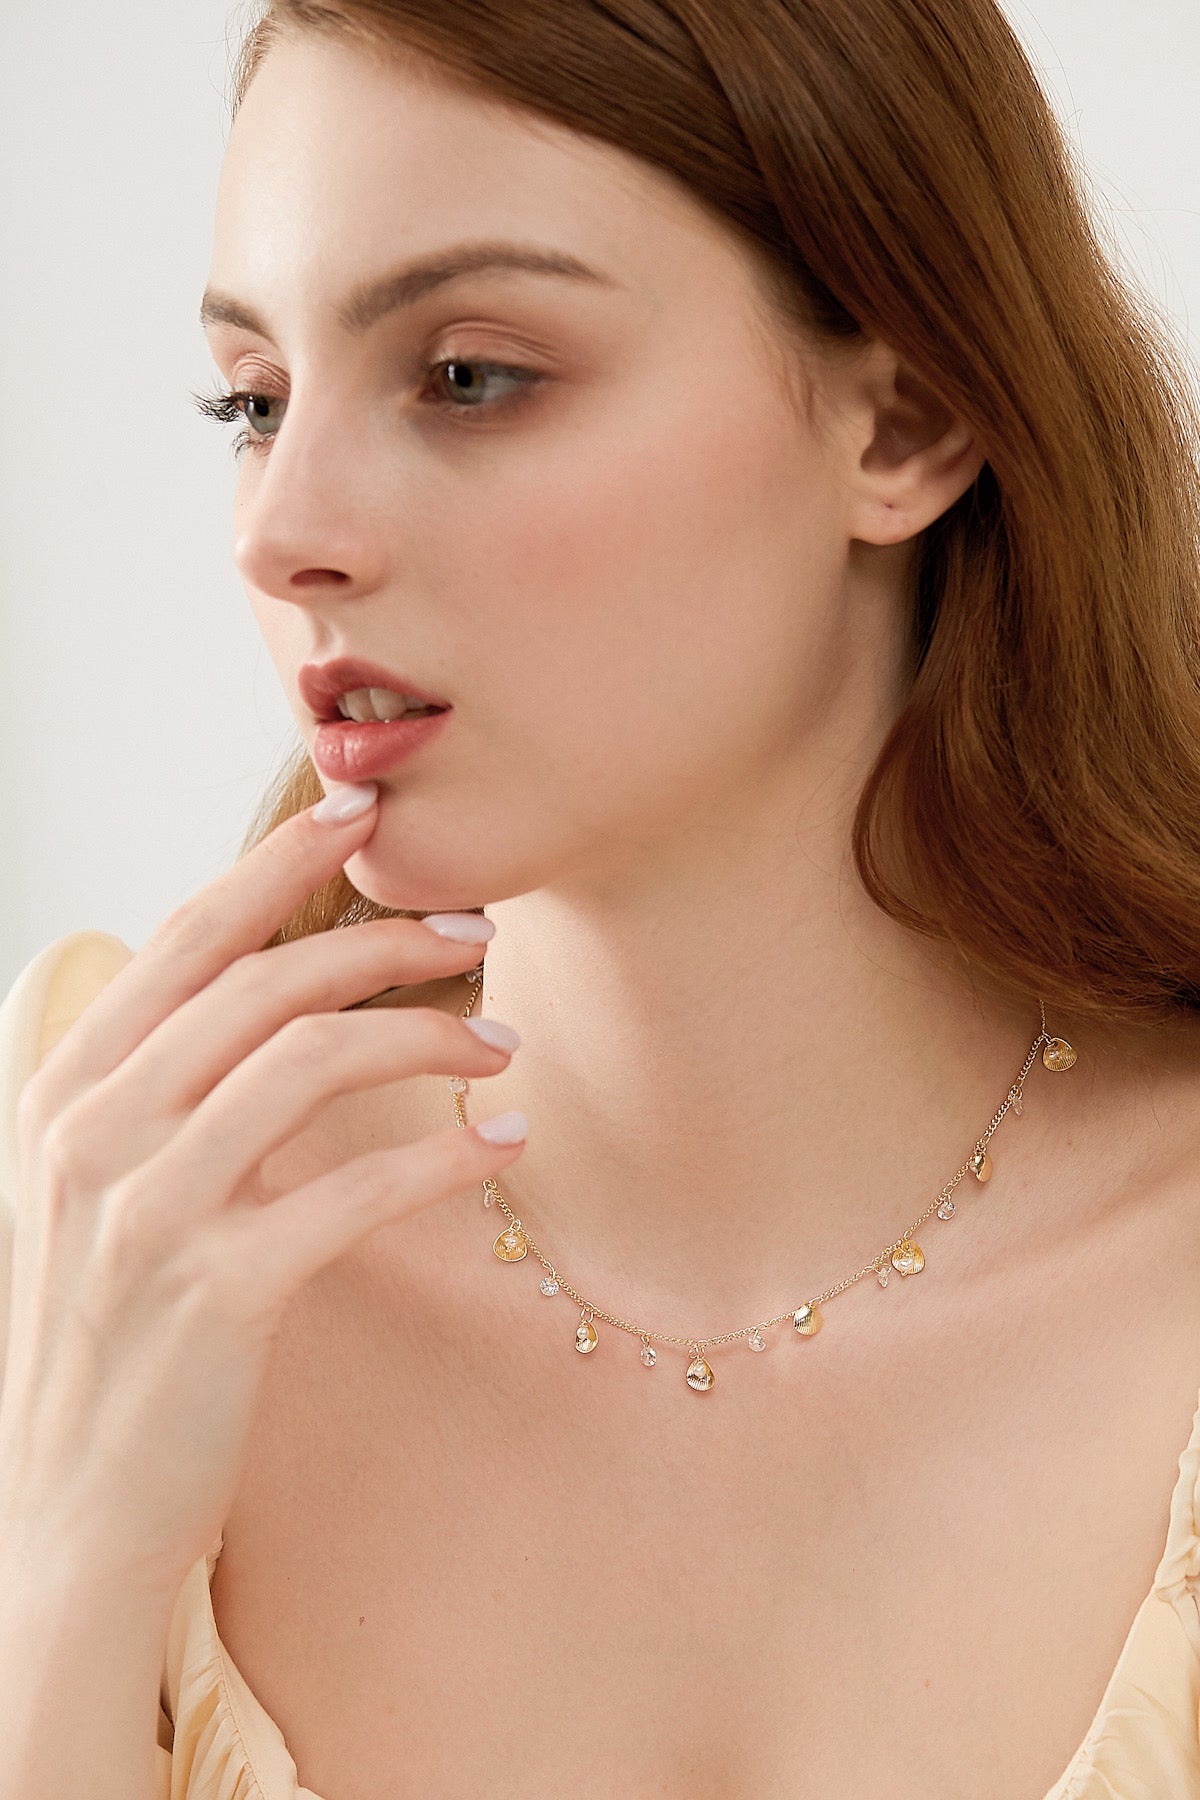 SKYE San Francisco Shop SF Chic Modern Elegant Classy Women Jewelry French Parisian Minimalist Alida 18K Gold Crystal Seashell Necklace 2